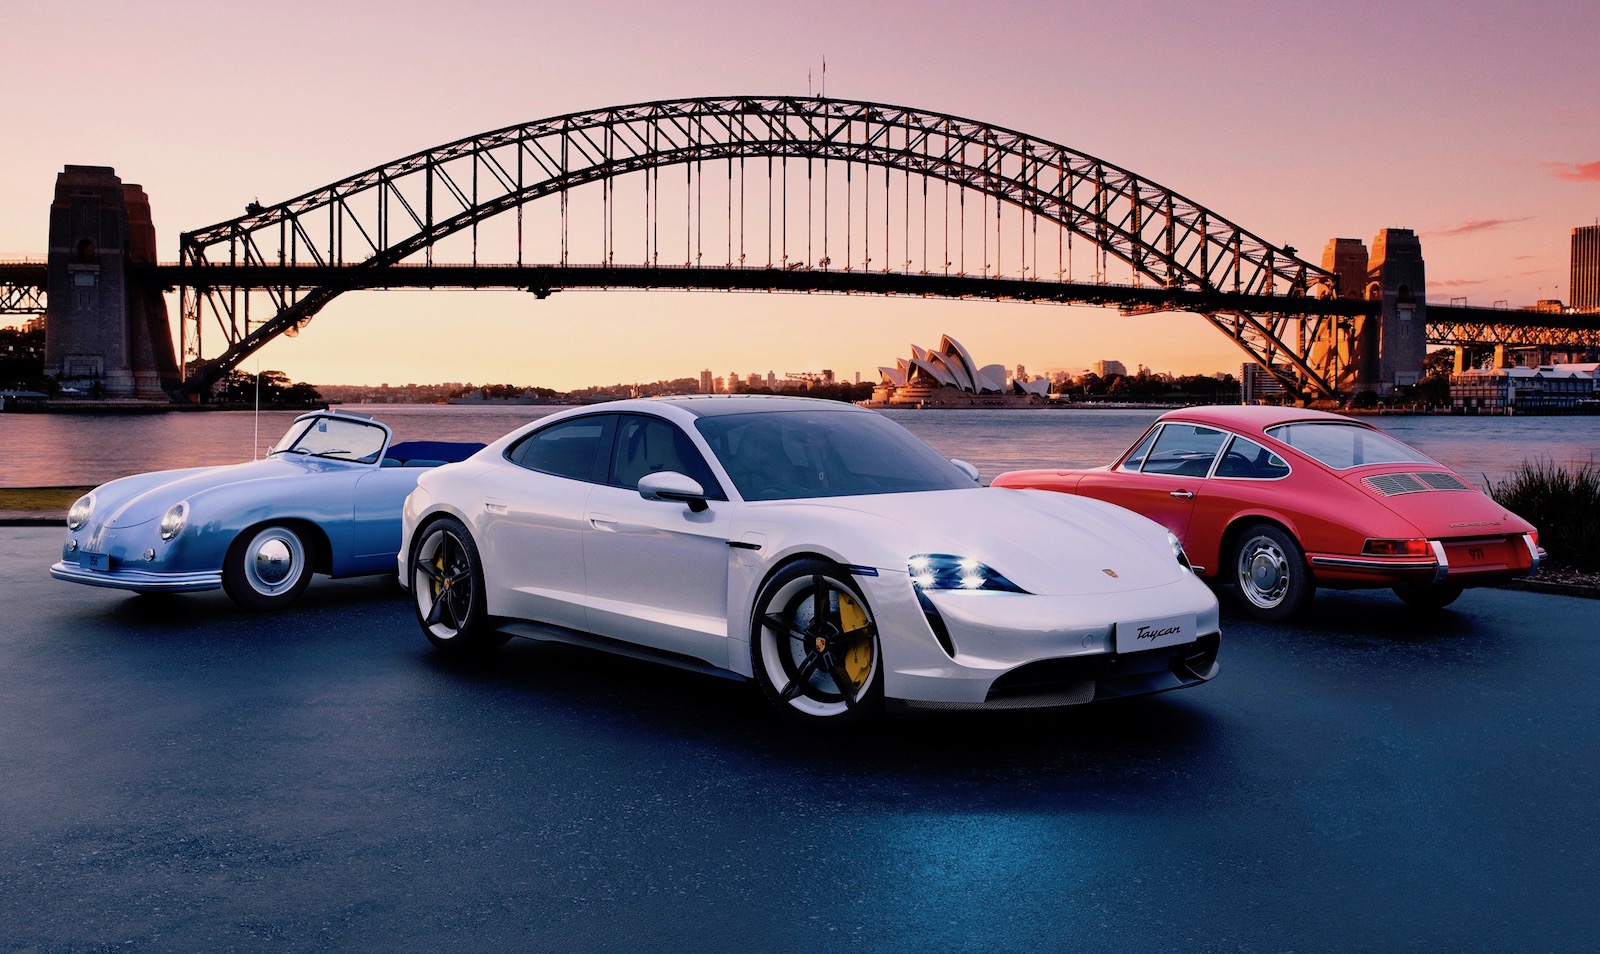 Porsche Australia confirms special edition for 70th anniversary